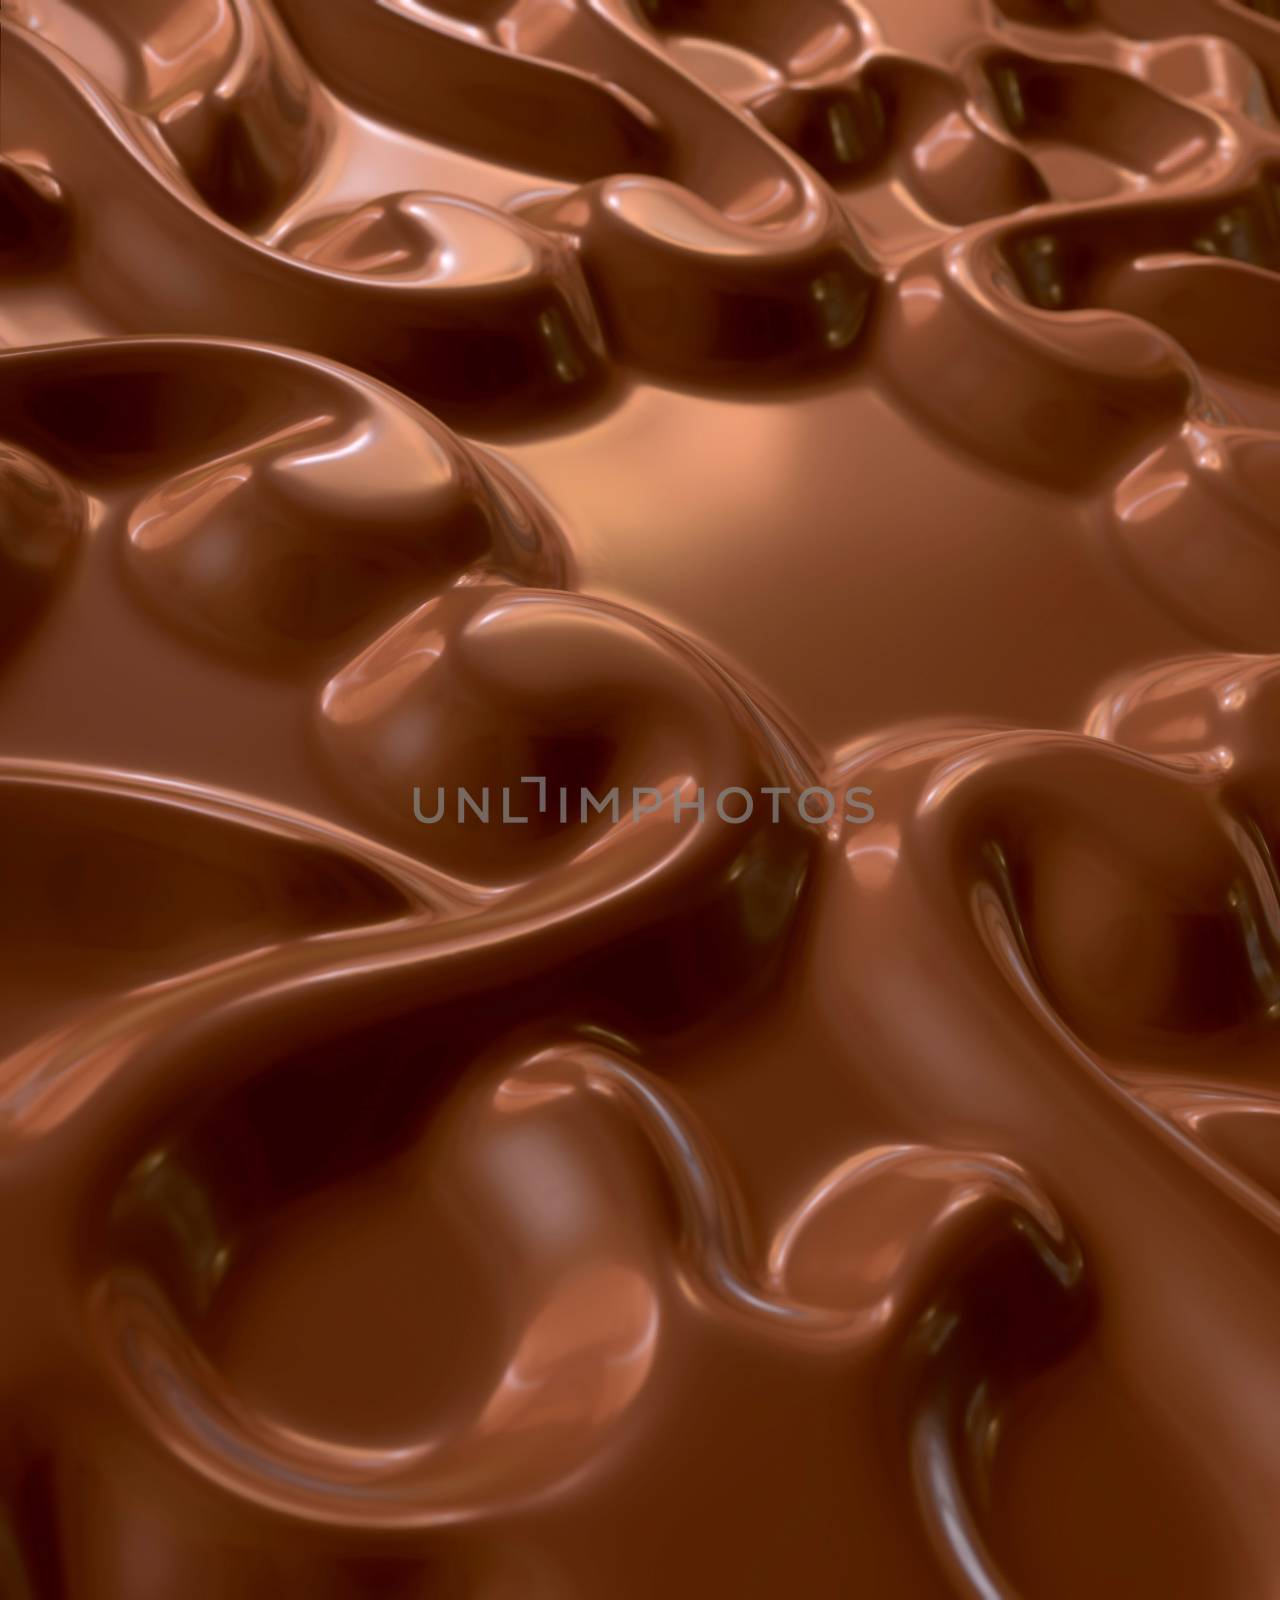 Ornate chocolate background pattern.